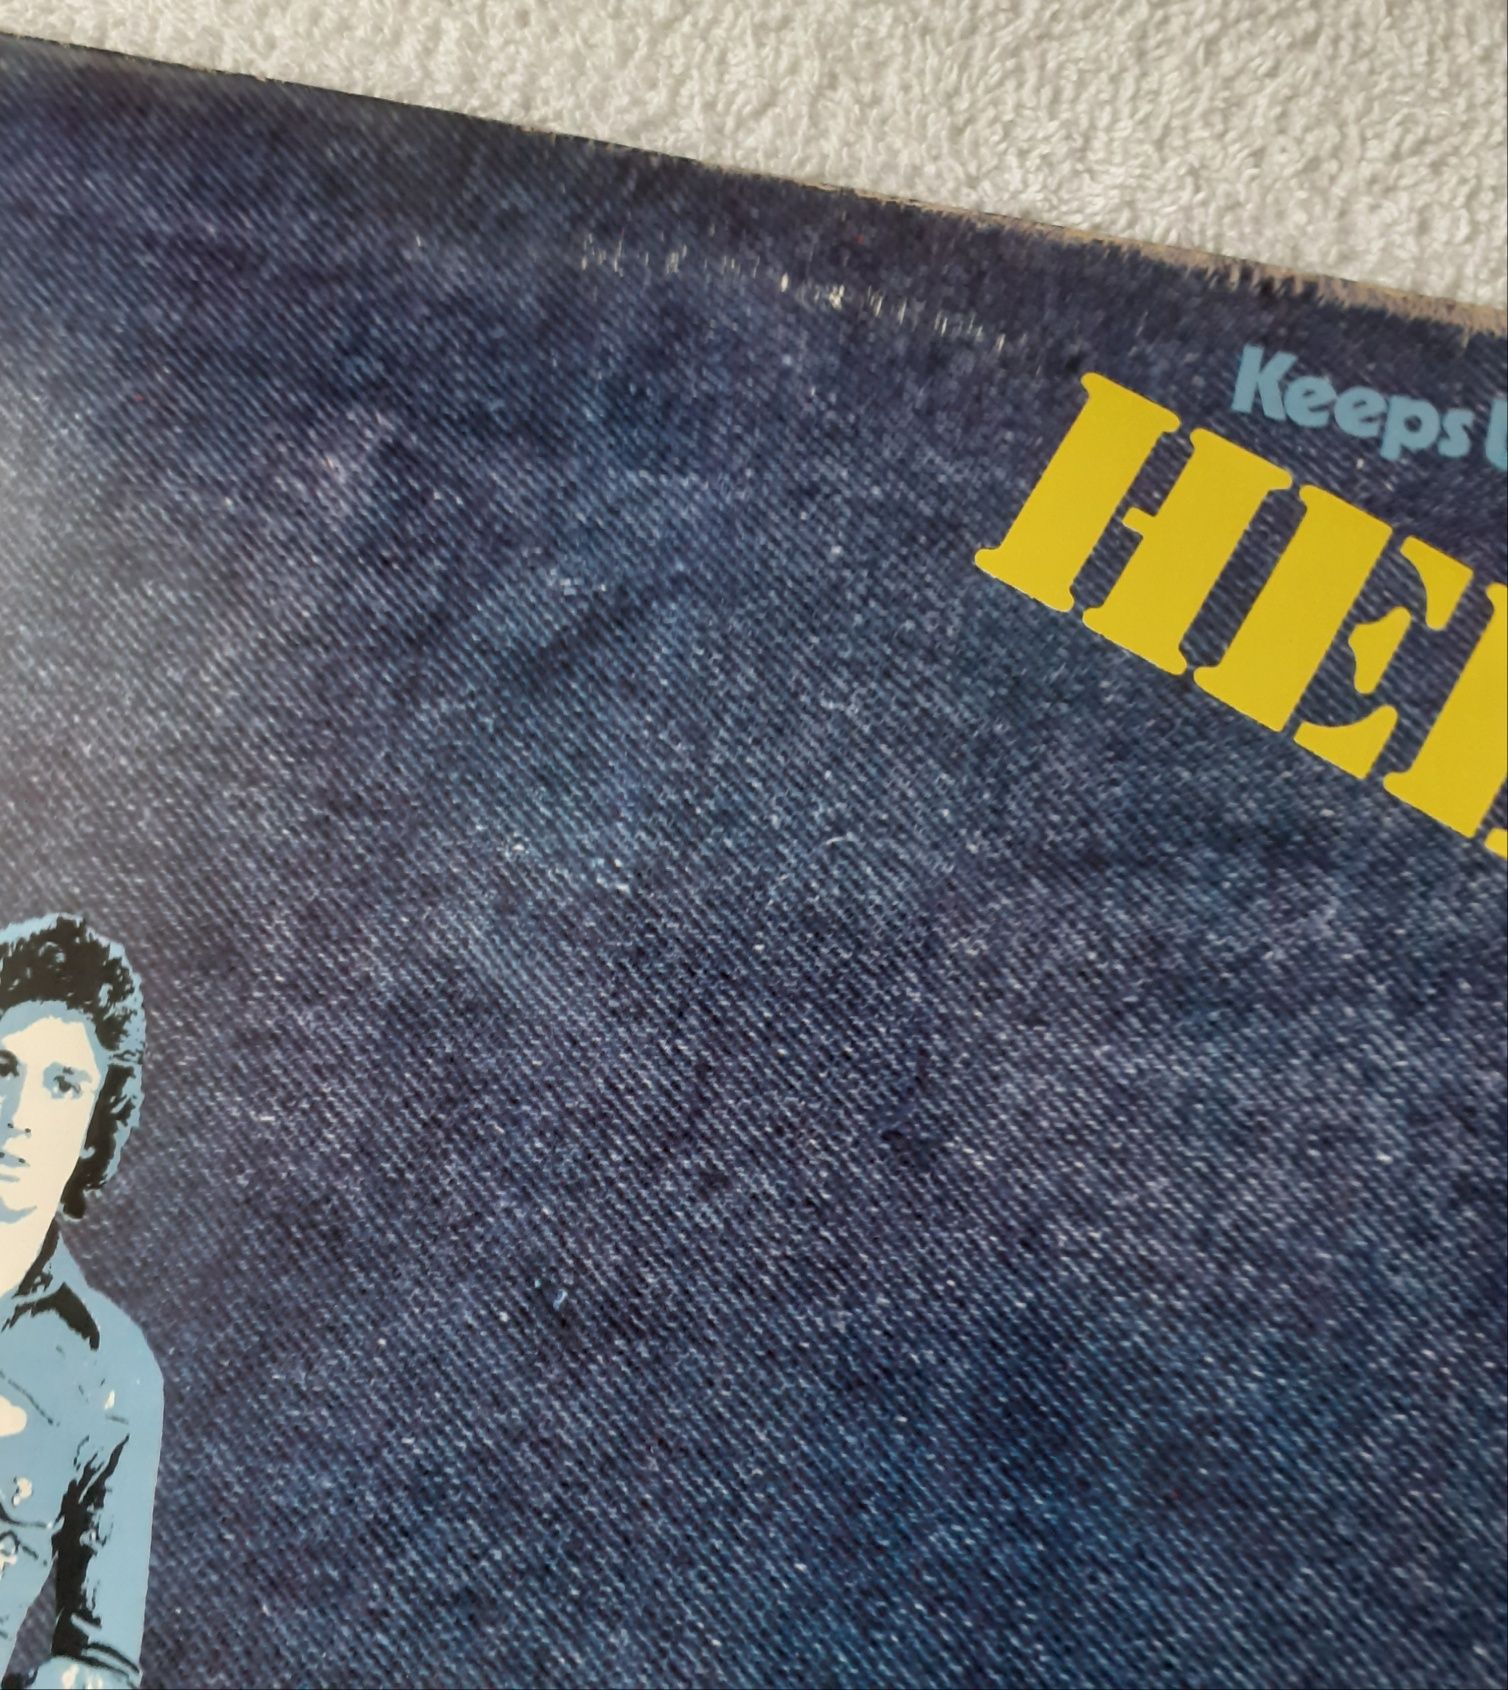 Hello – Keeps Us Off The Streets (Vinyl, LP, Album)